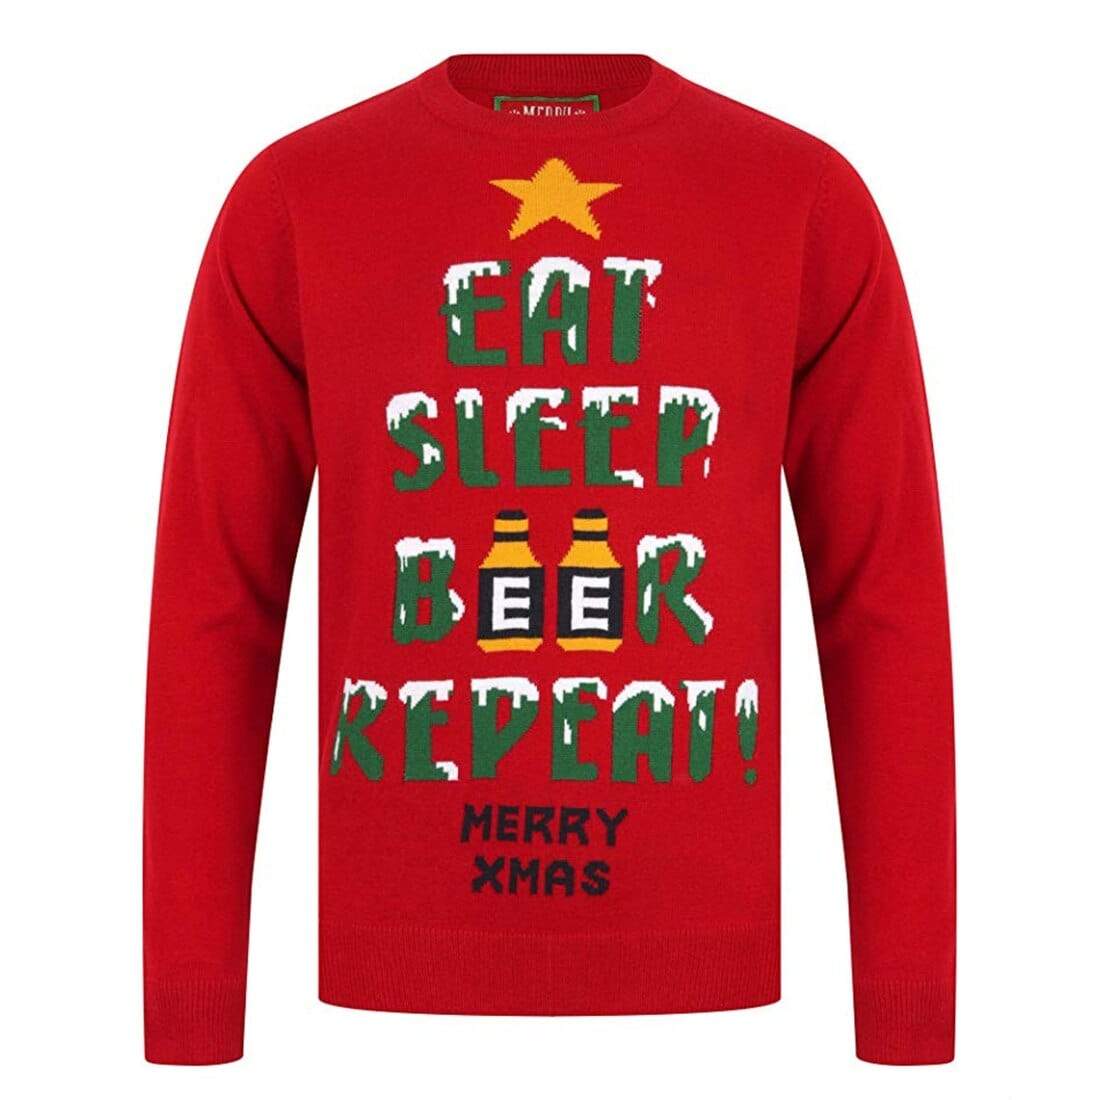 Mr Crimbo Mens Eat Sleep Beer Repeat Christmas Jumper - MrCrimbo.co.uk -SRG1A13463_F - Red -booze jumper